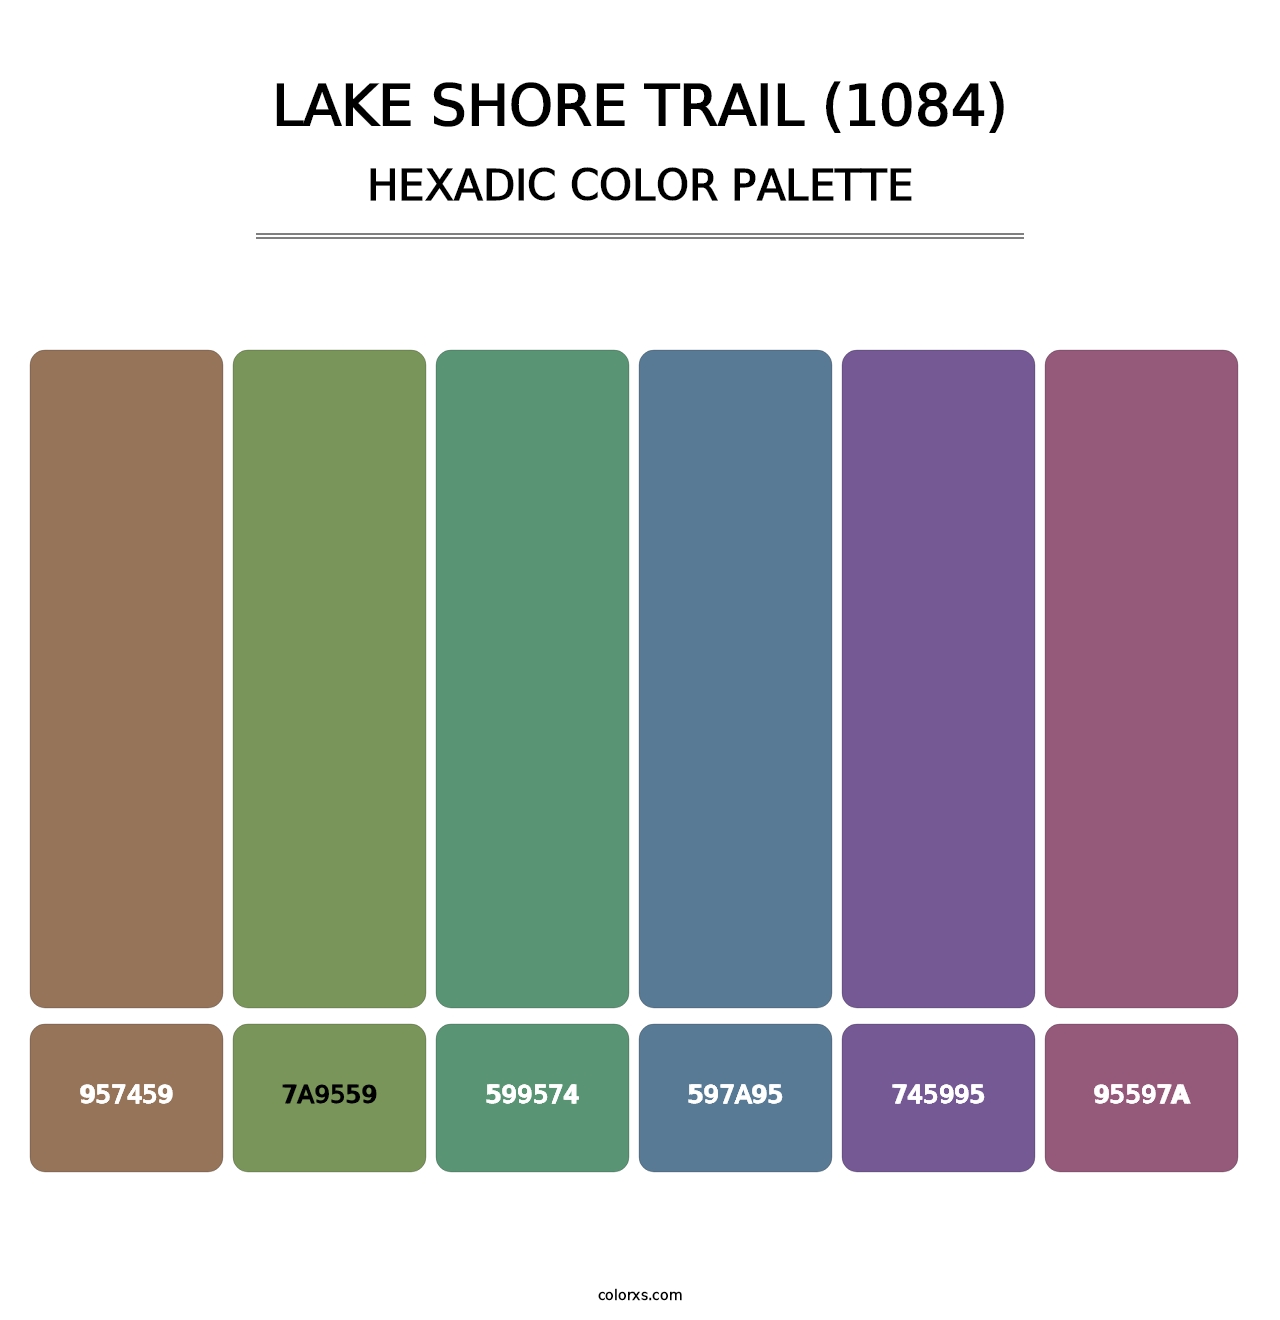 Lake Shore Trail (1084) - Hexadic Color Palette